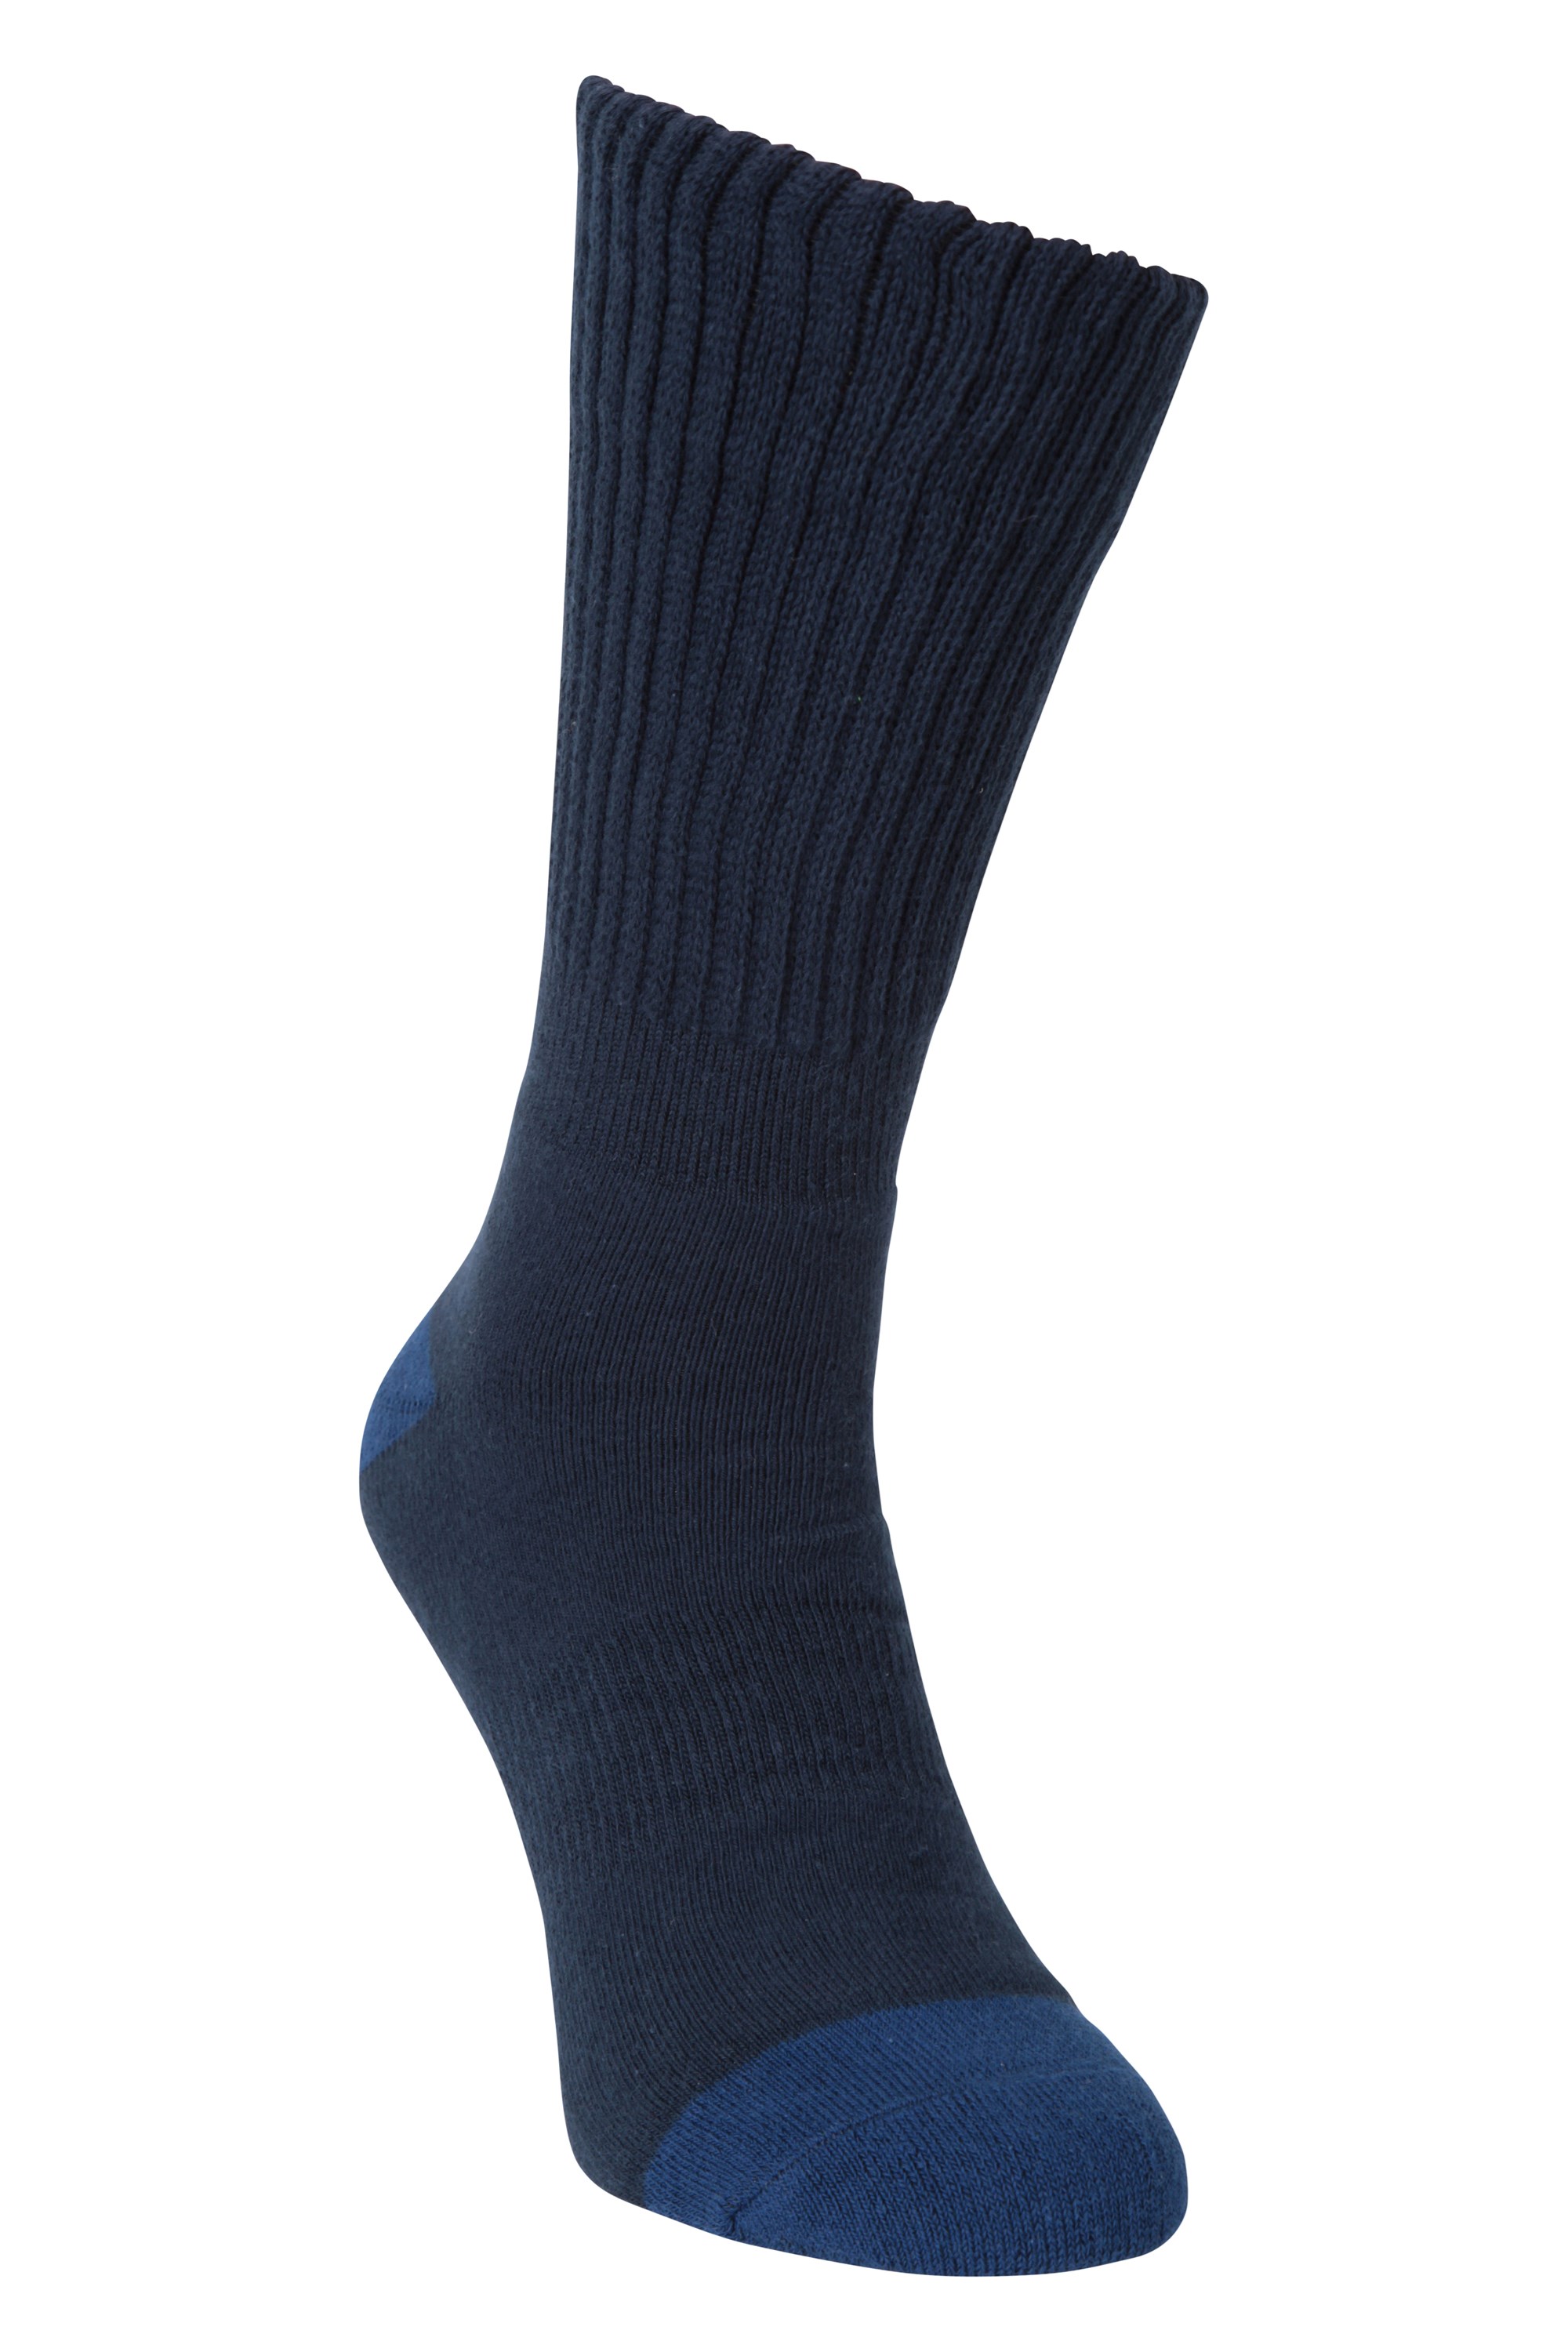 Double Layer Anti-Chafe Mid-Calf Walking Socks - Navy